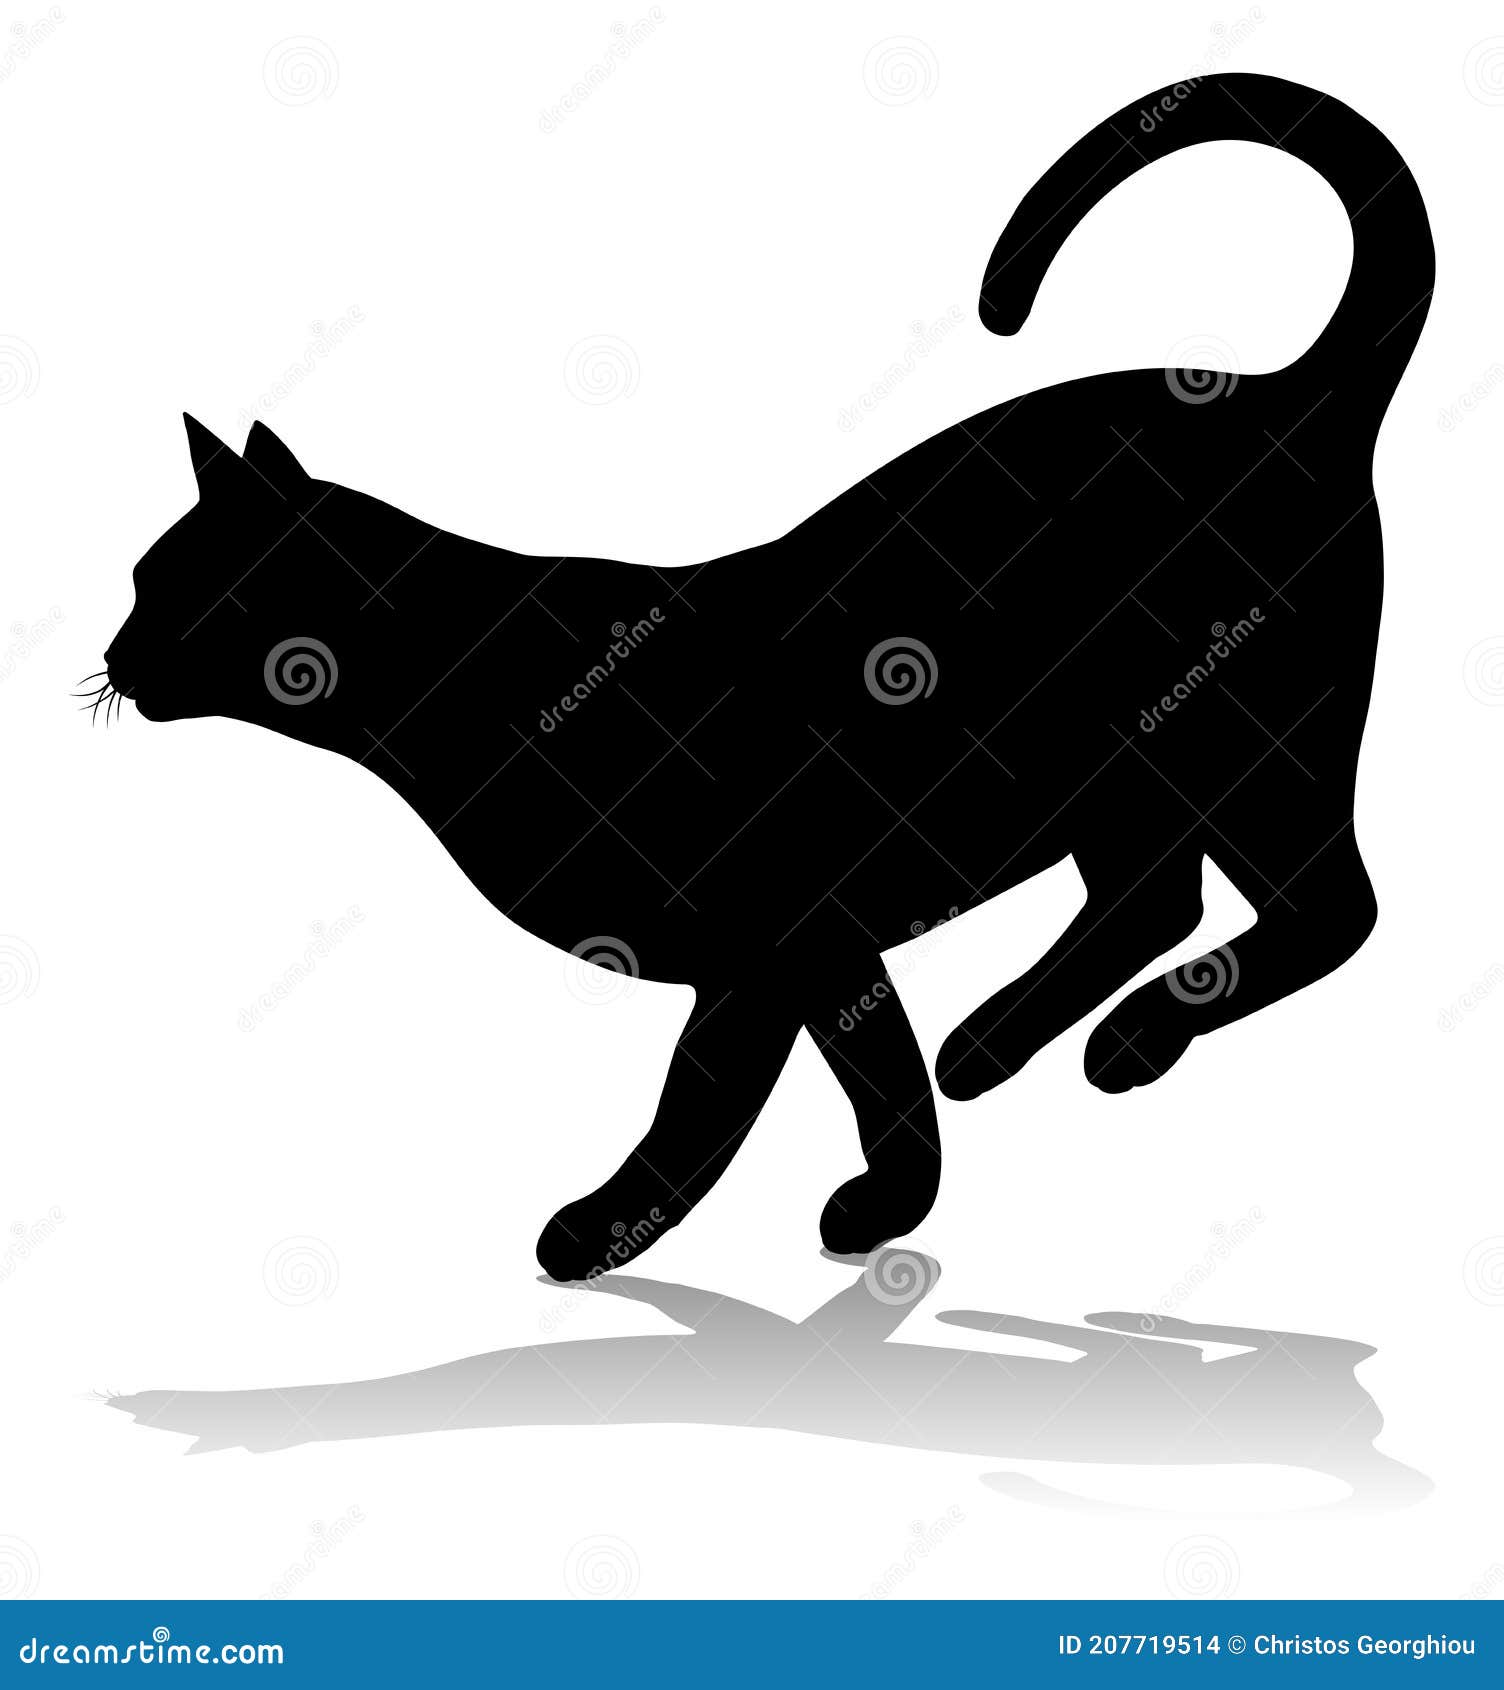 silhouette cat pet animal